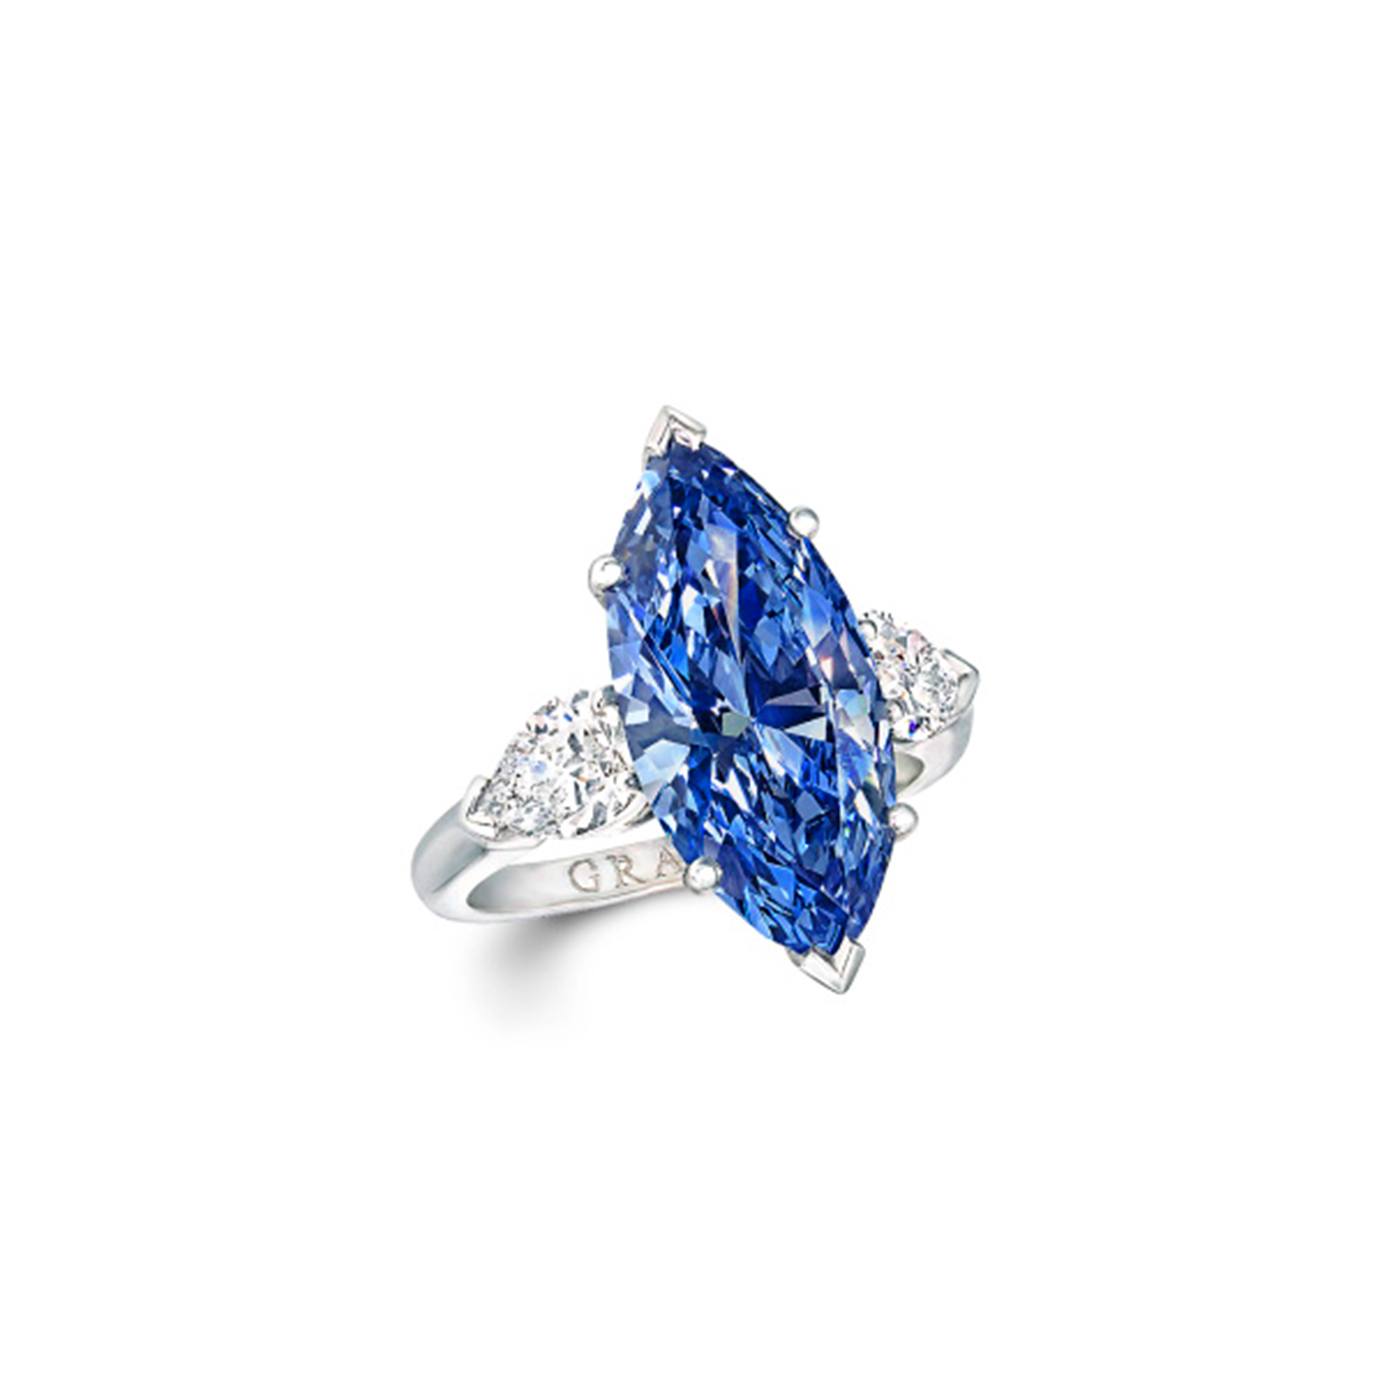 Marquise Cut Blue Diamond Ring.